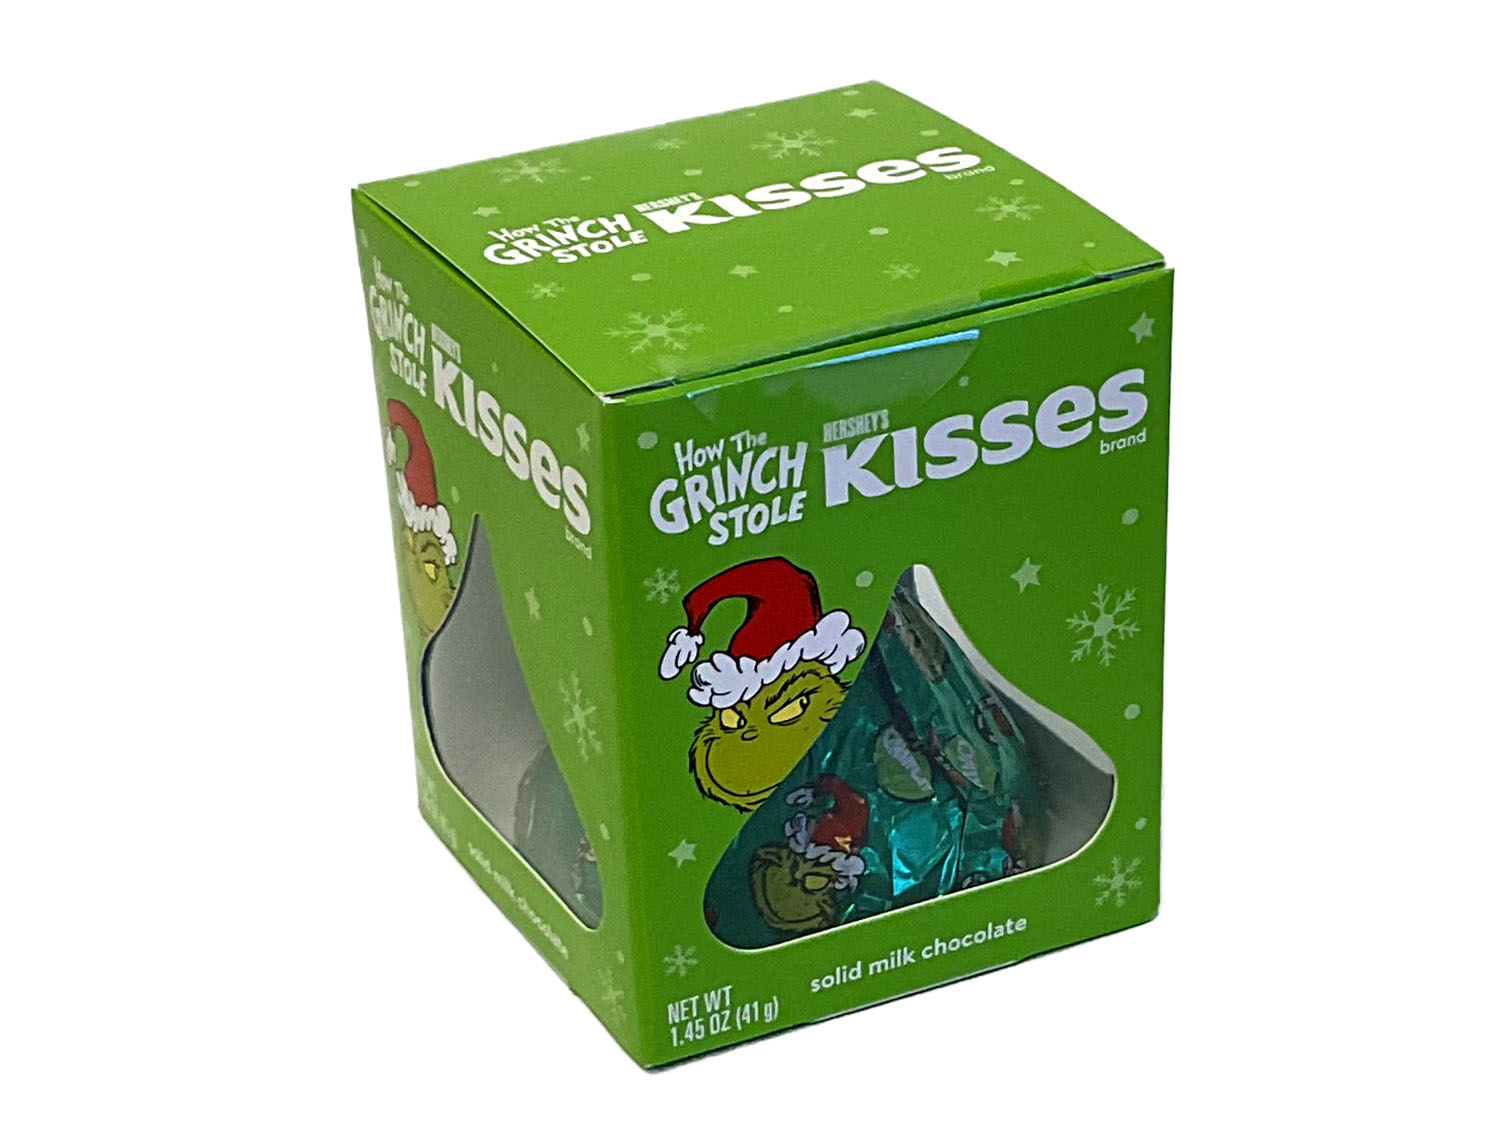 Giant Hershey Kiss - Grinch Foil - 1.45 oz